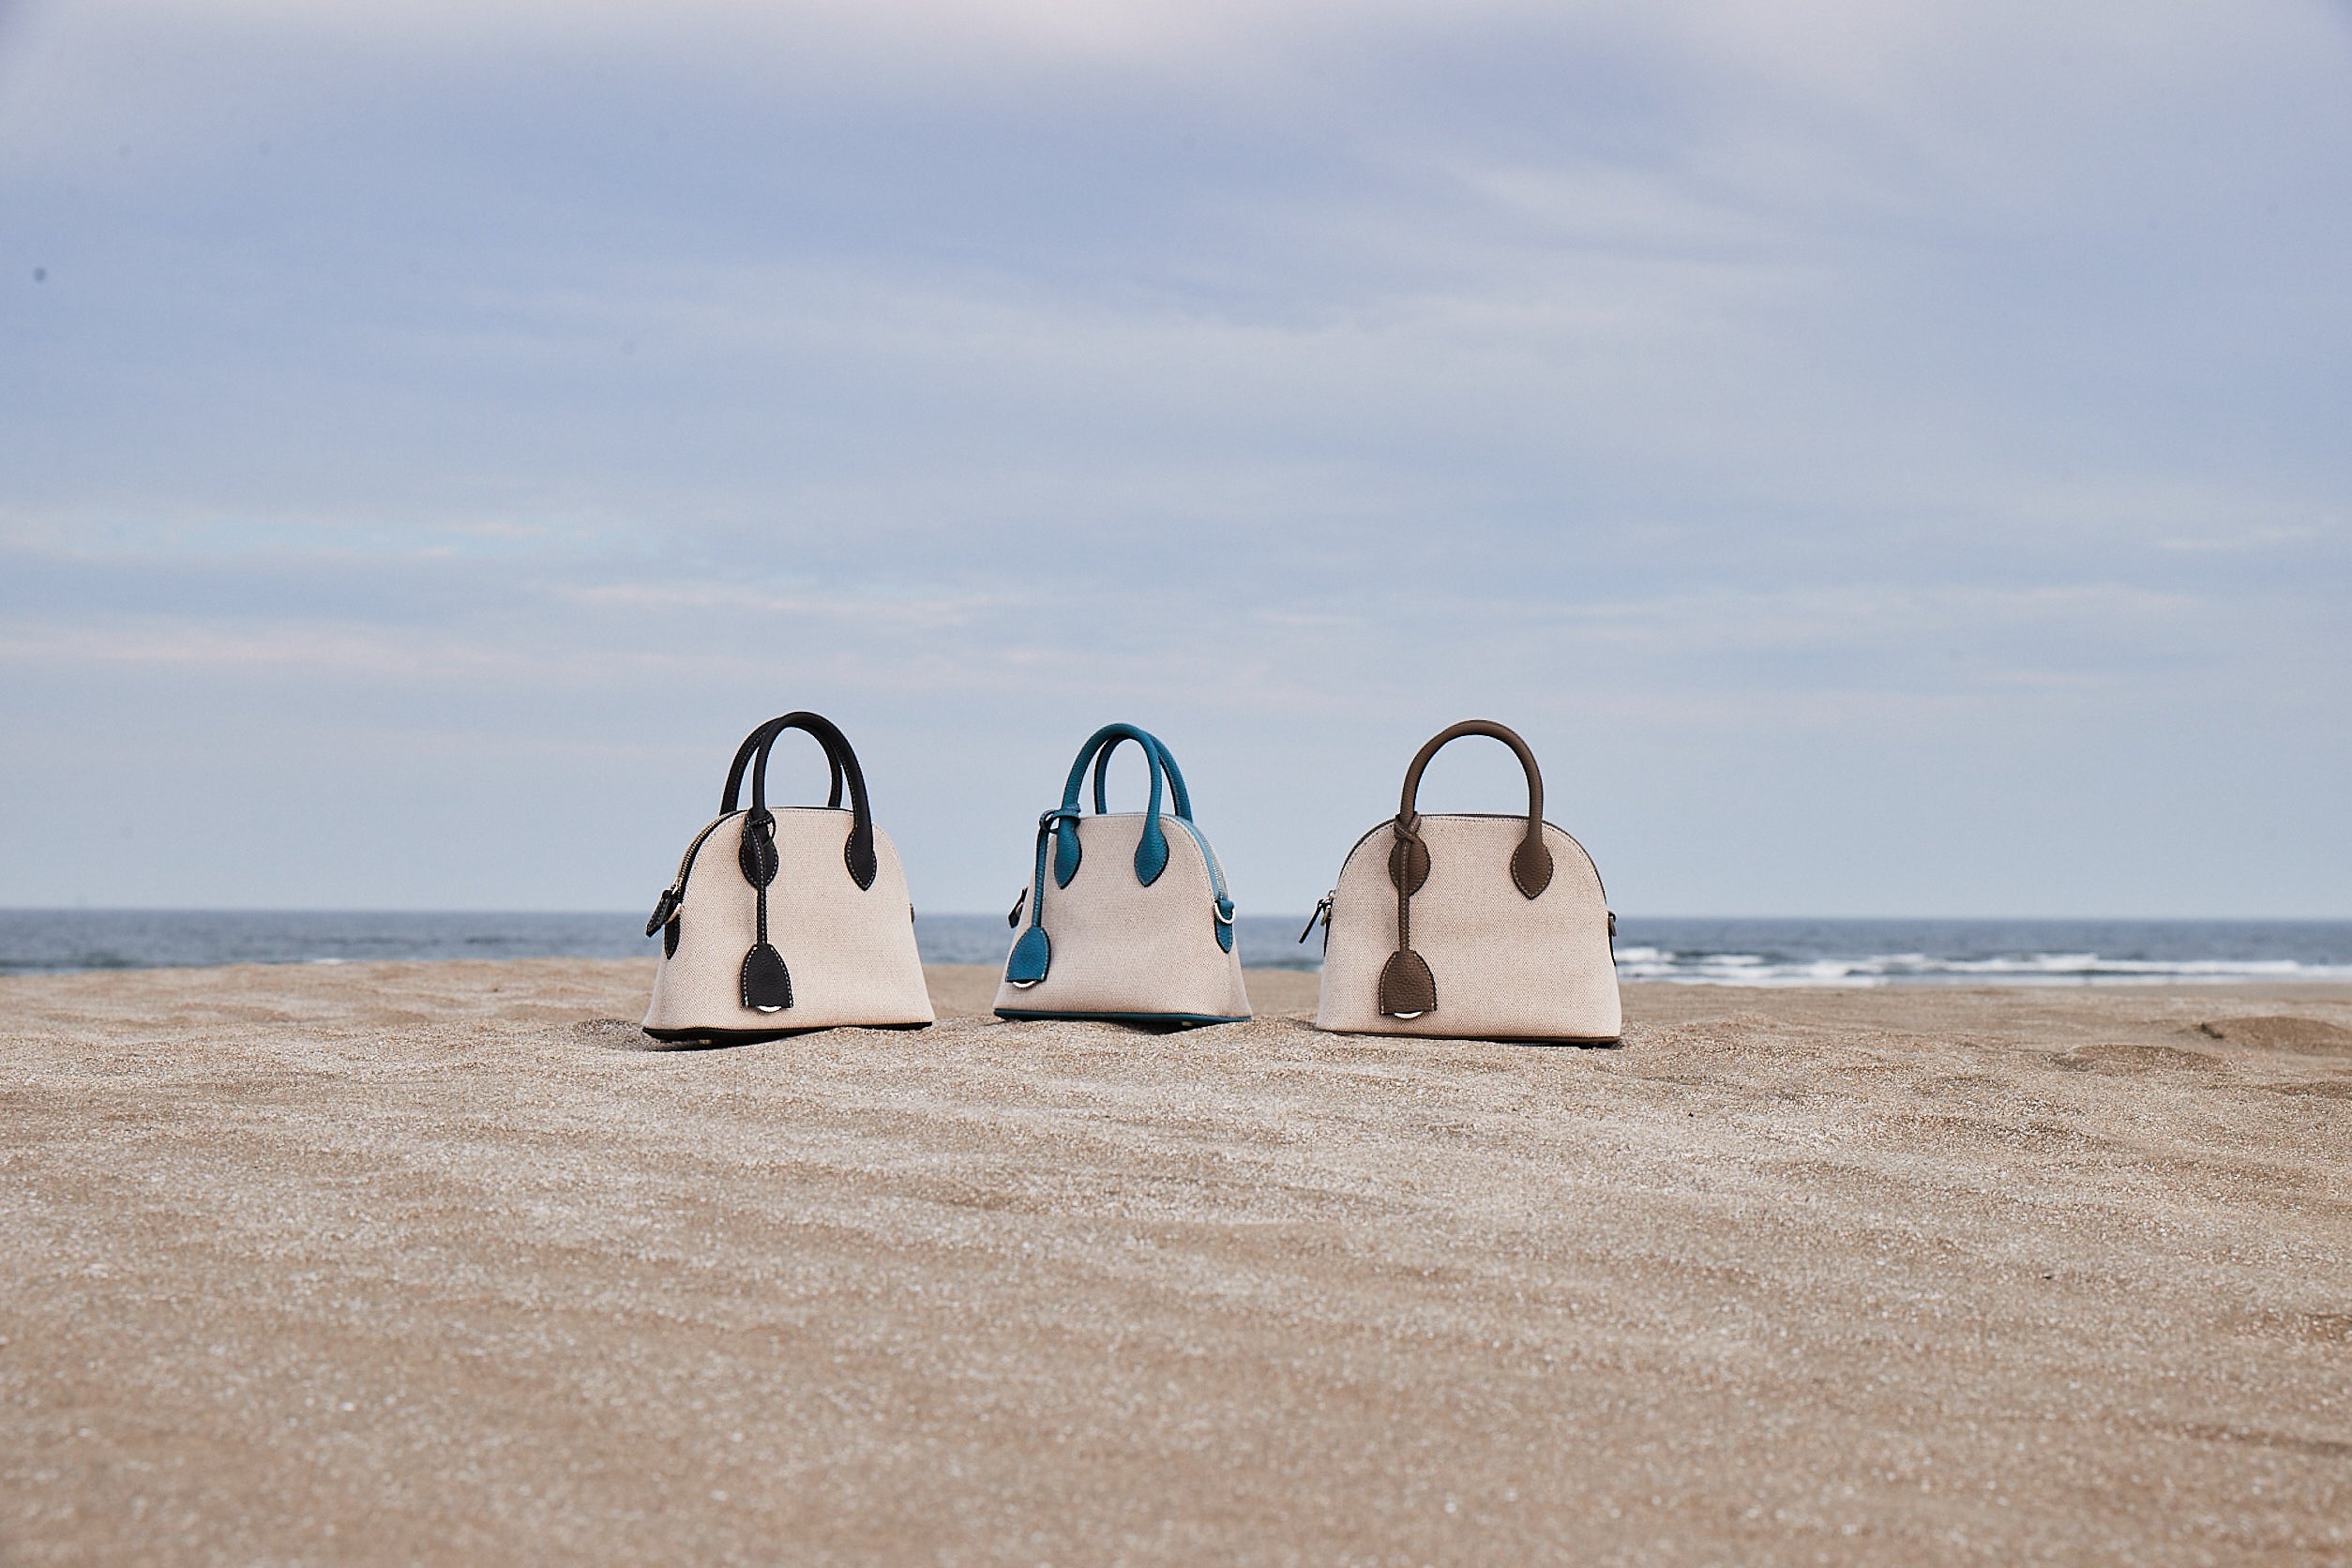 Summer Canvas Mini Emma bags by BONAVENTURA presented at the beach.